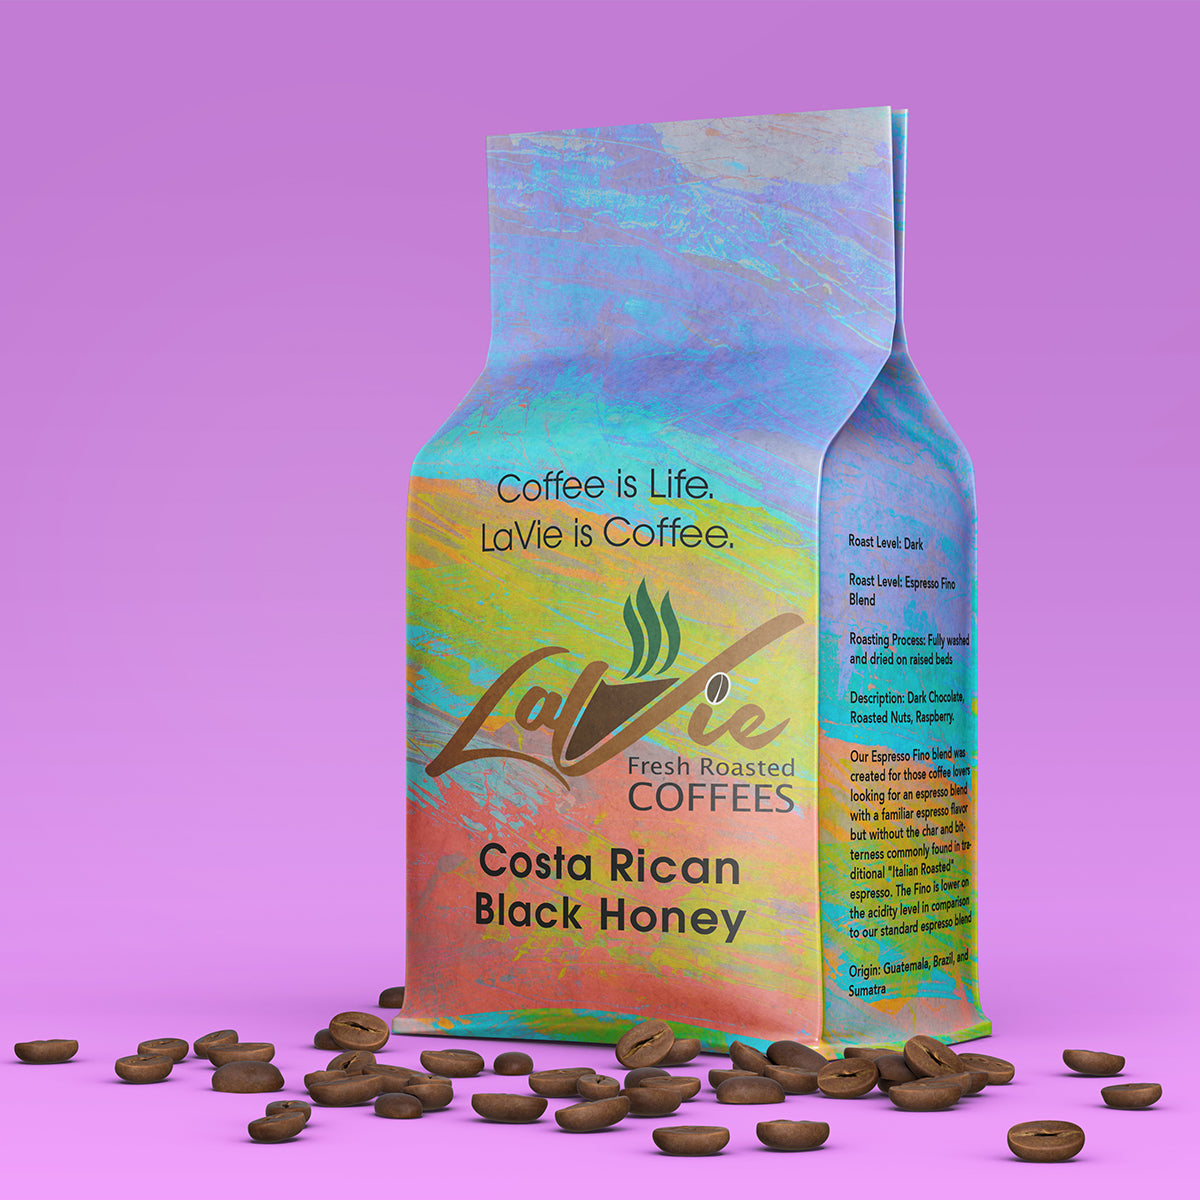 Costa Rican Black Honey